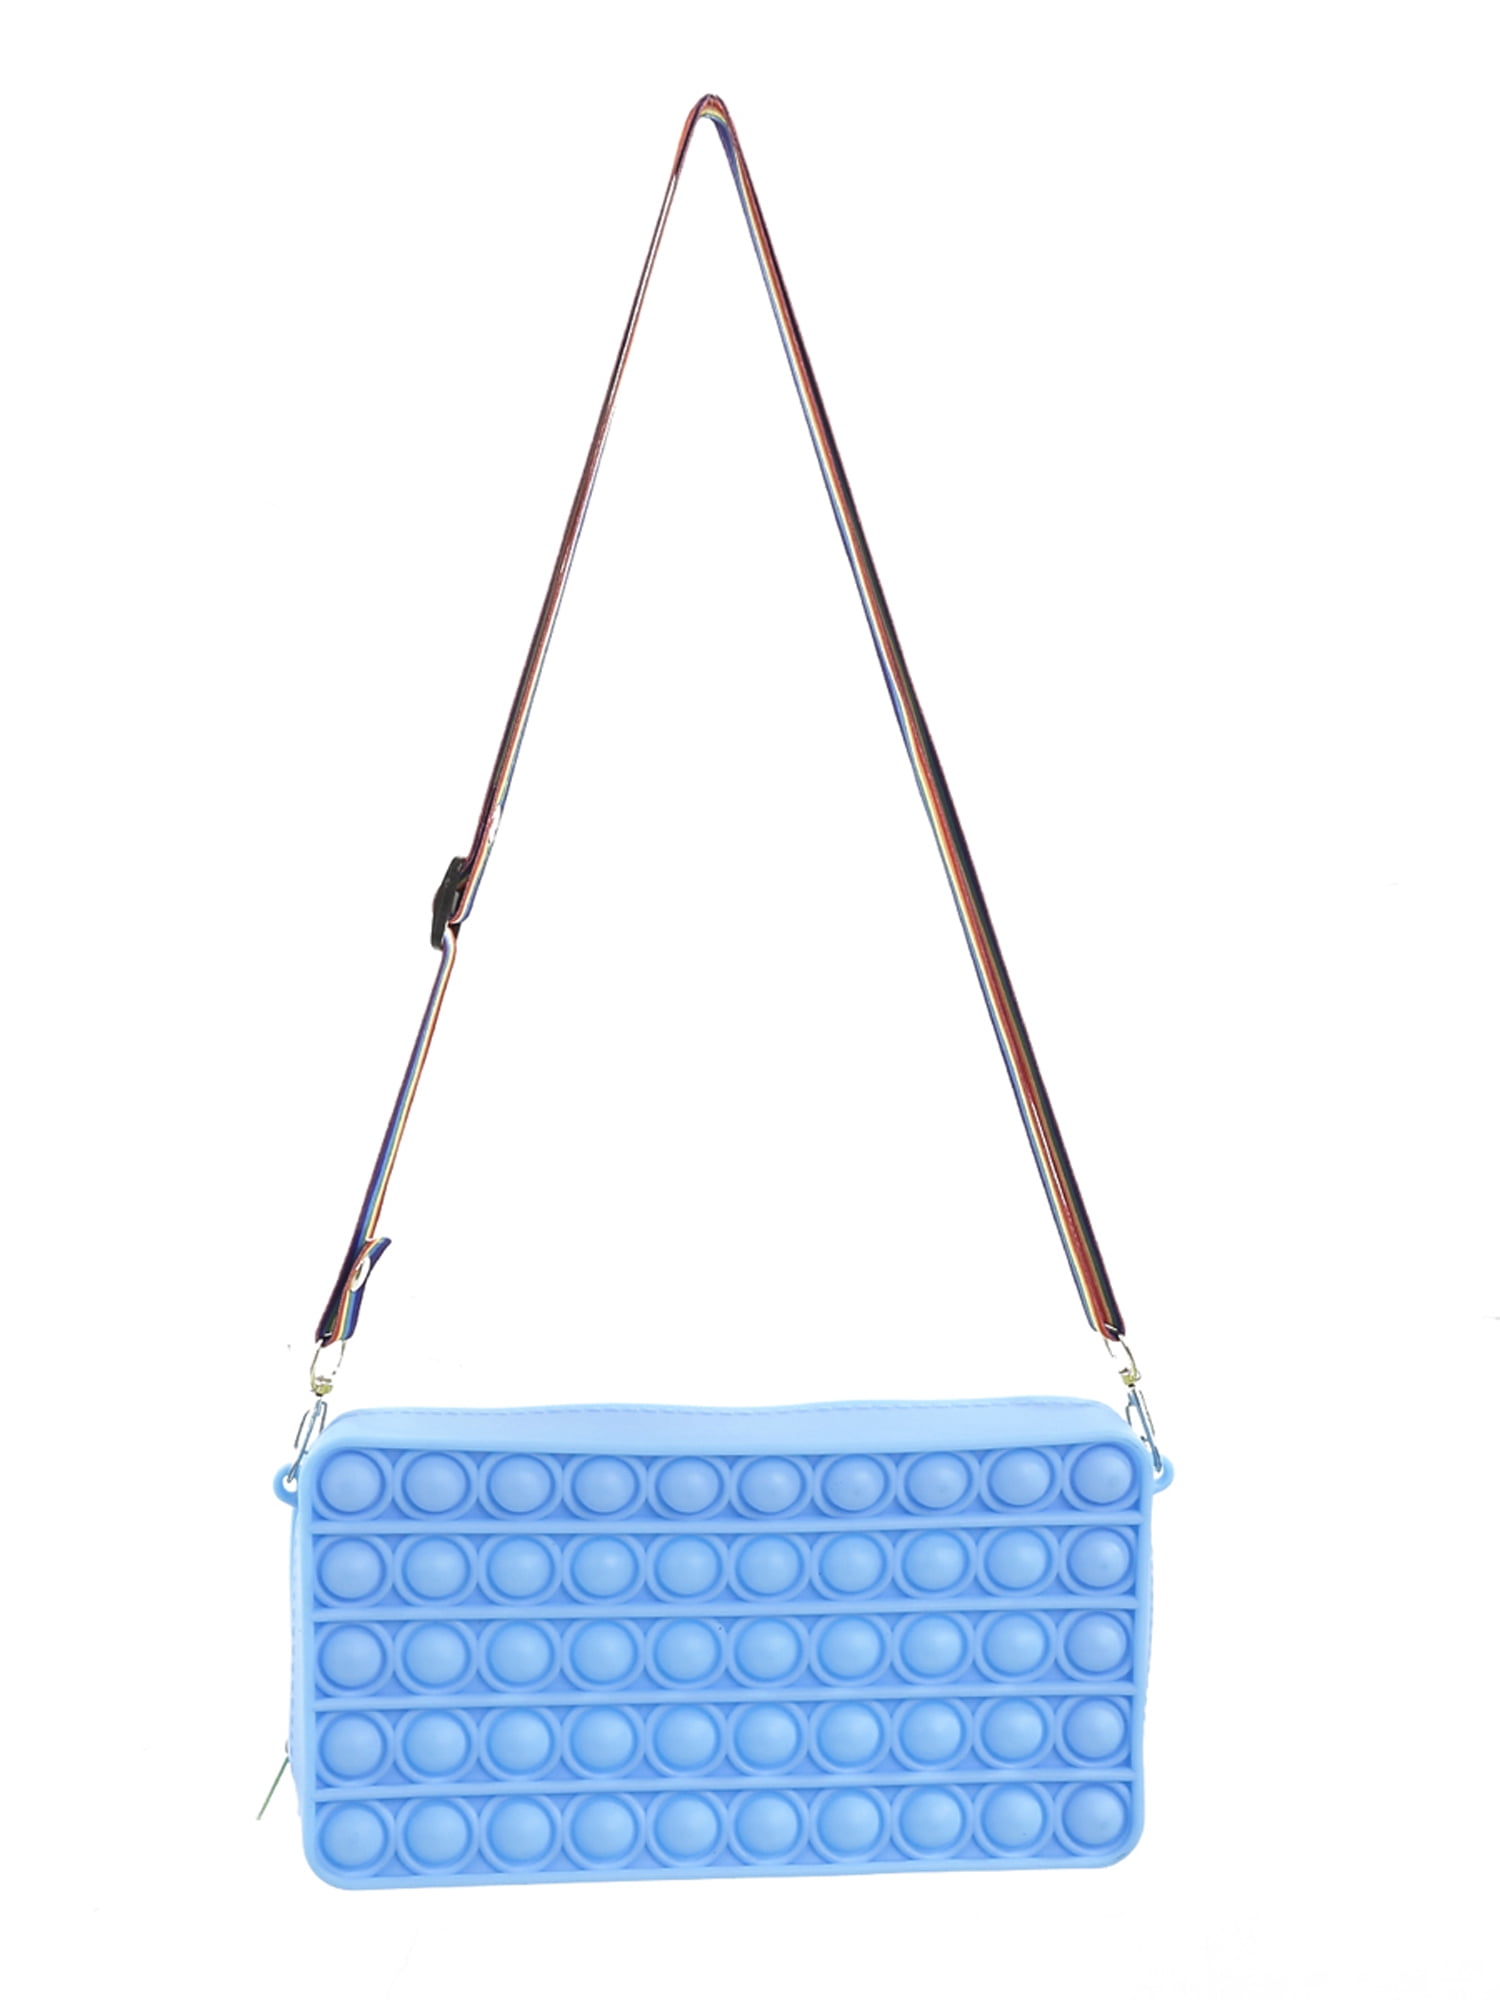 2 in 1 Bubble Purse Handbags Rainbow Silicone Sensory Toys Crossbody Bag with Adjustable Shoulder Strap & Zip Closure Strawberry Wallet for Grils Women Pop Shoulder Bag 